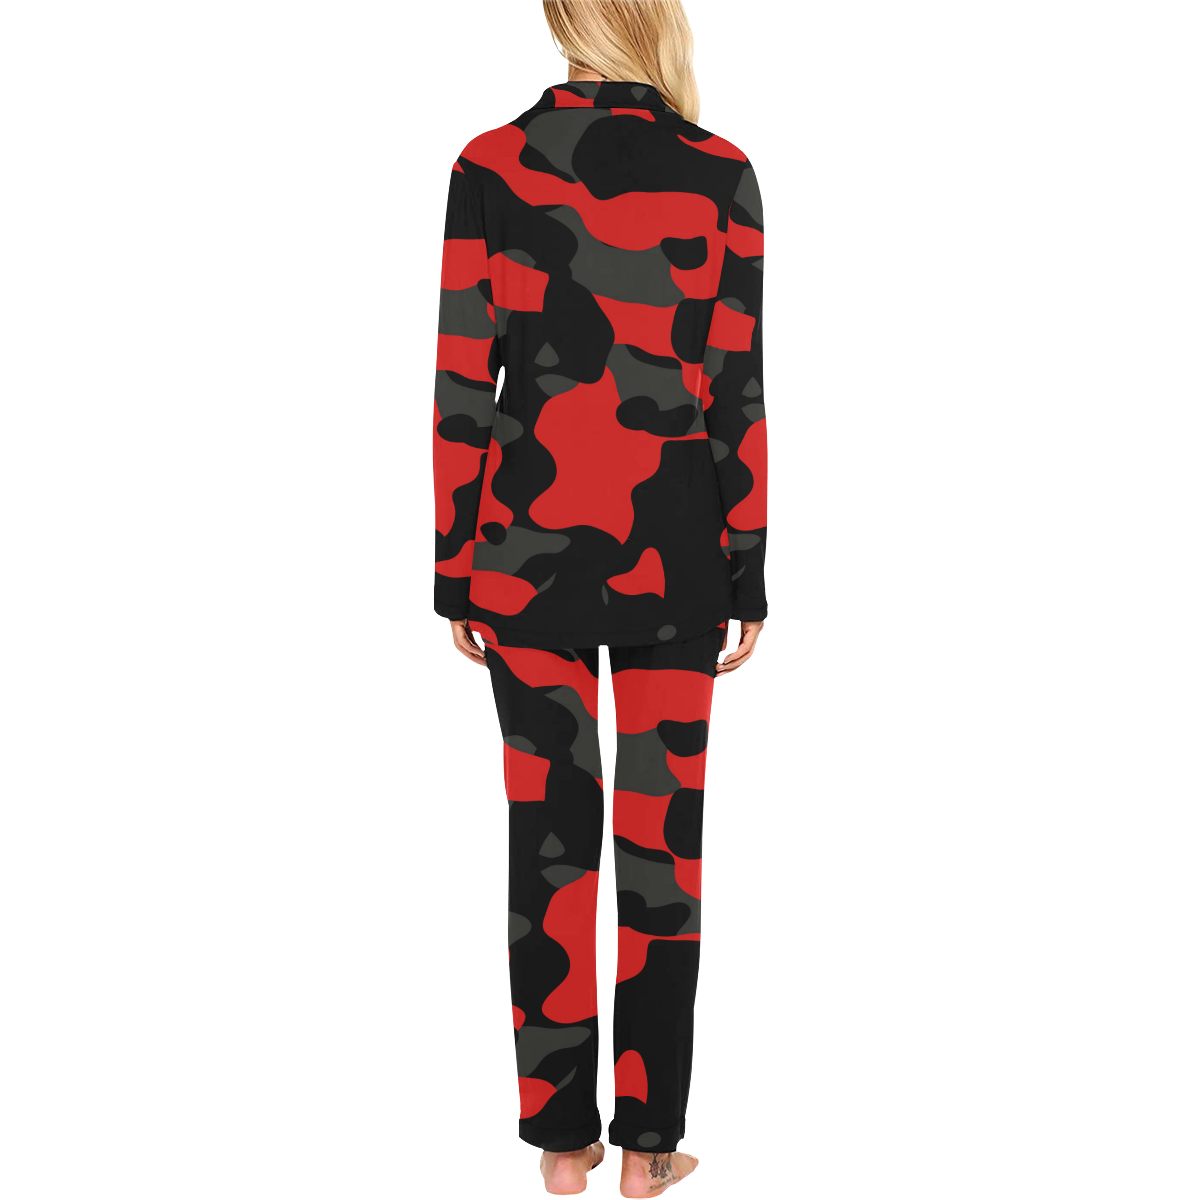 Red and Black Camo Women's Long Pajama Set